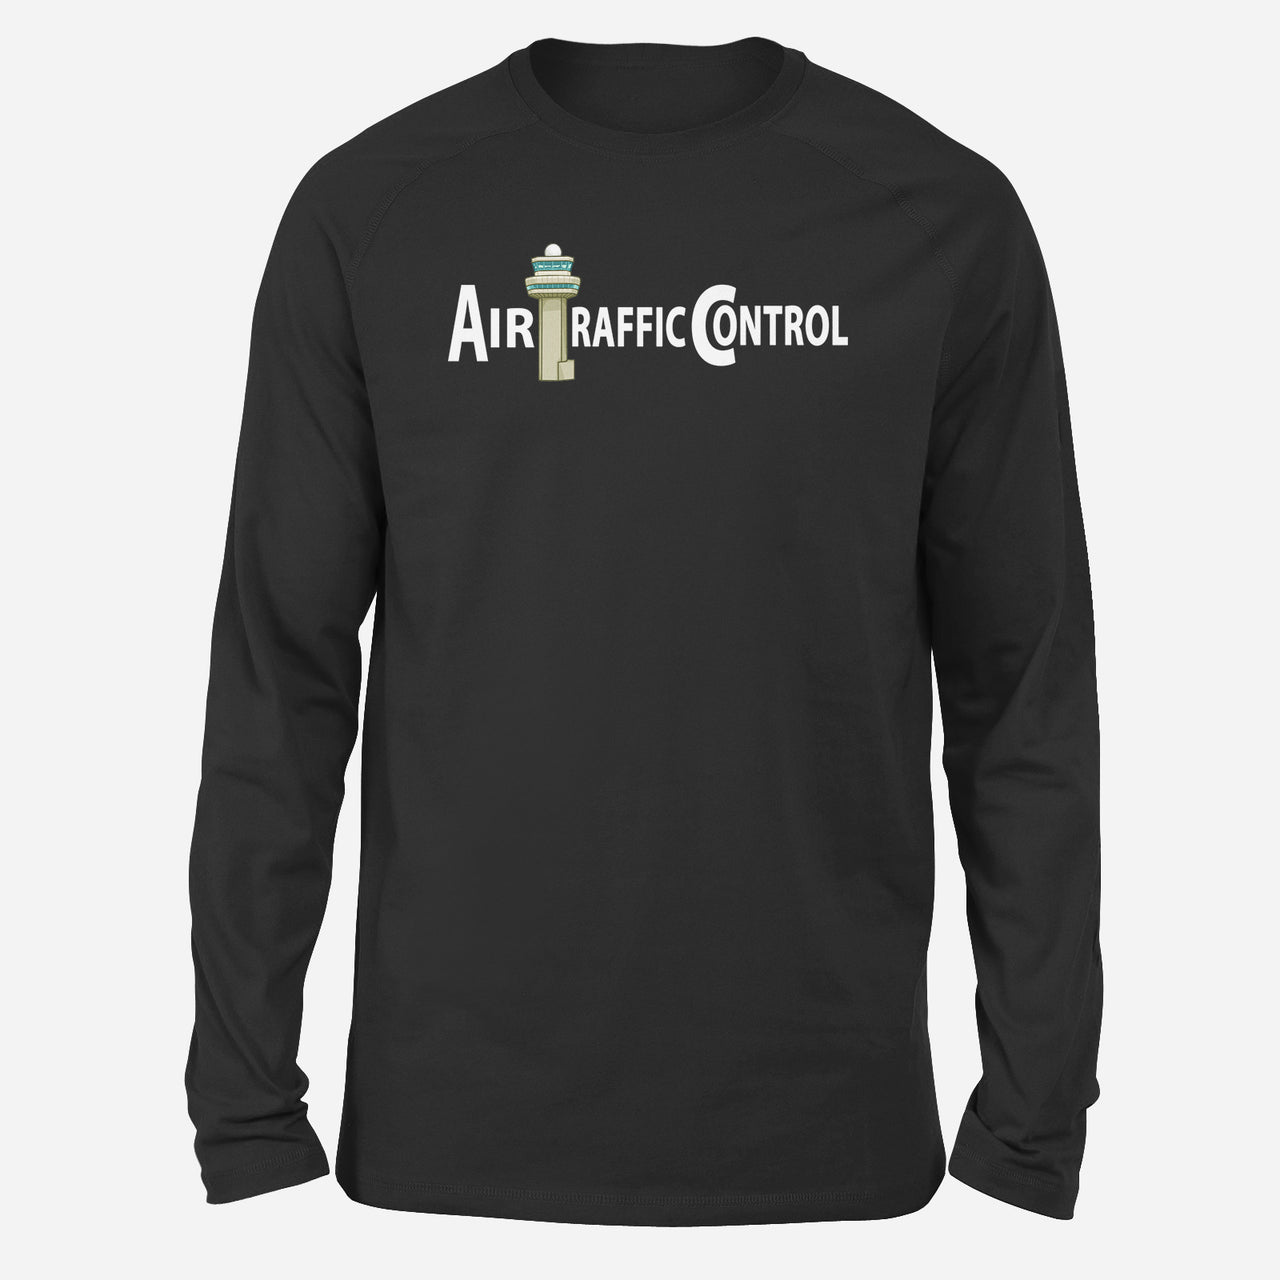 Air Traffic Control Designed Long-Sleeve T-Shirts